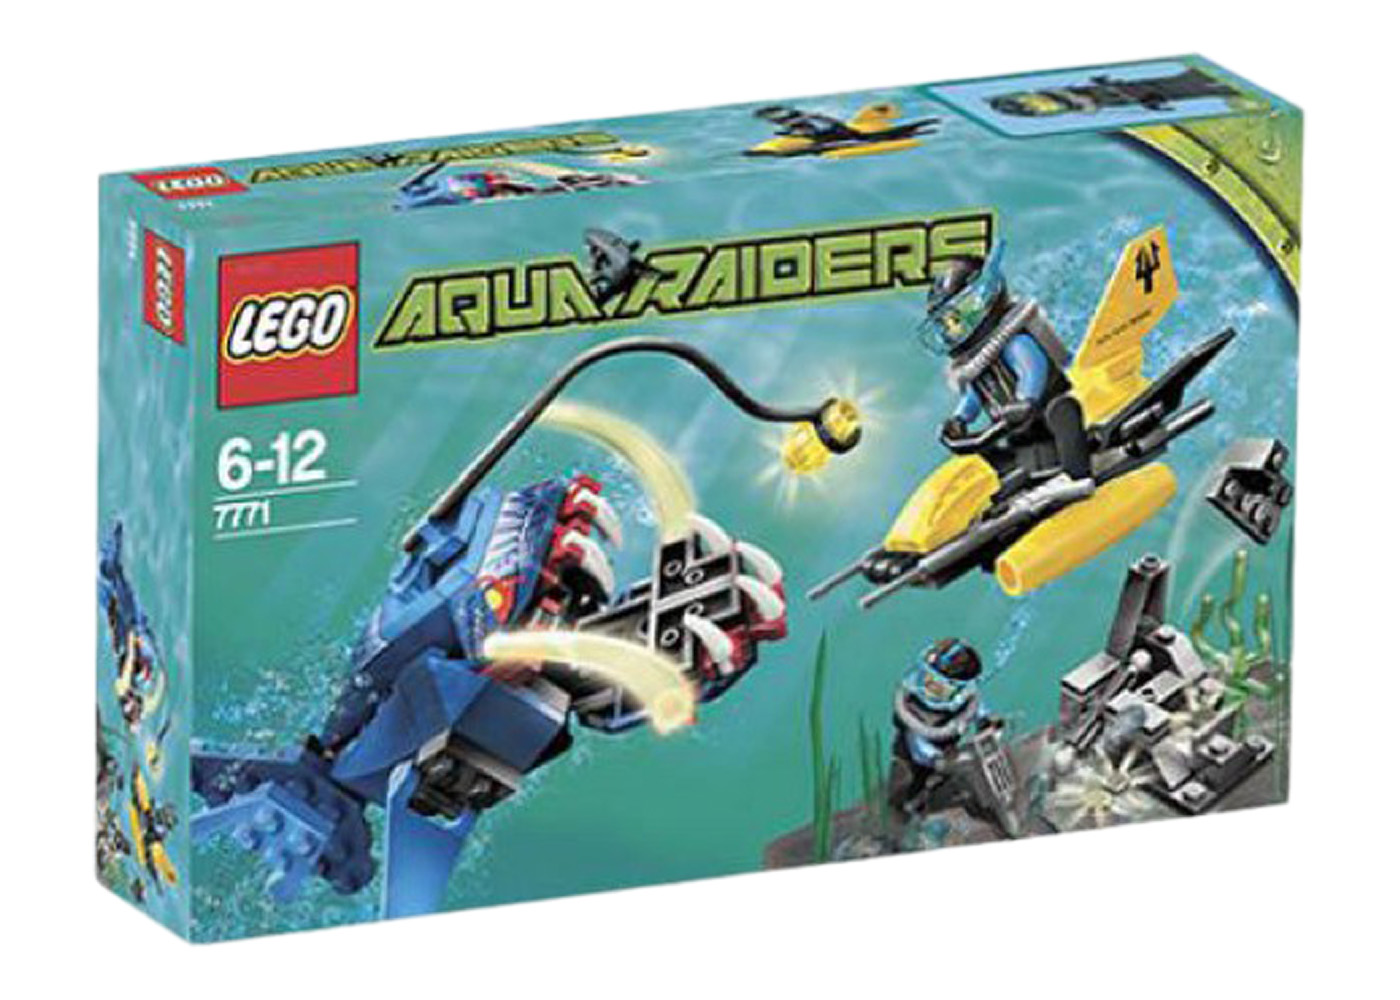 LEGO Aqua Raiders Angler Ambush Set 7771 - JP